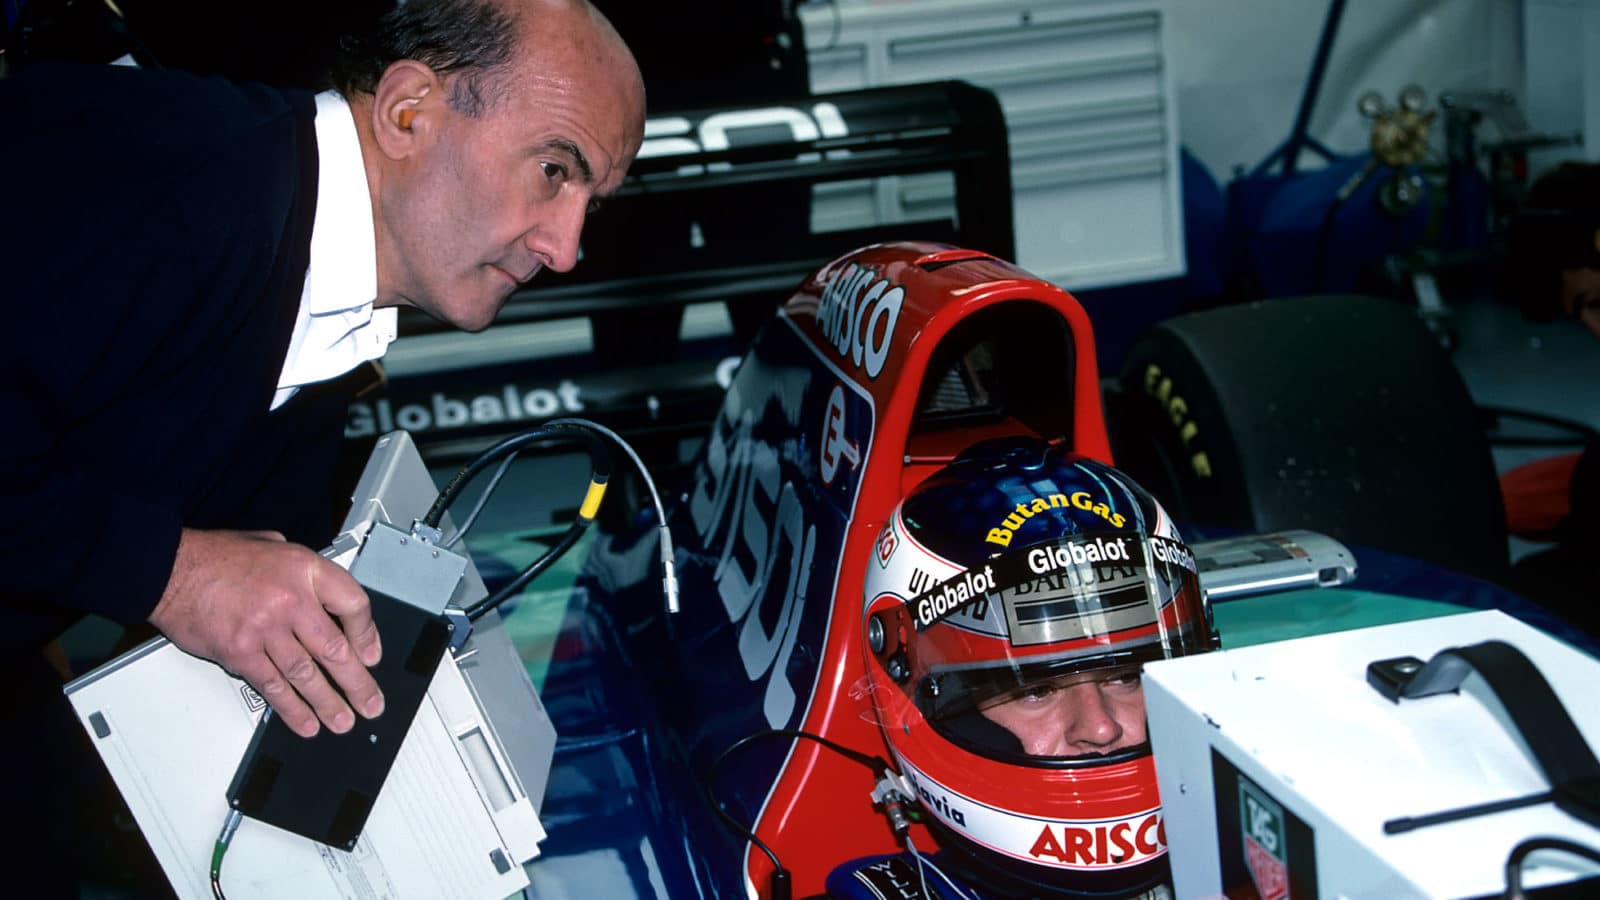 Rubens Barrichello, Jordan-Hart 193, Grand Prix of Belgium, Circuit de Spa-Francorchamps, 29 August 1993. Rubens Barrichello and engine designer Brian Hart. (Photo by Paul-Henri Cahier/Getty Images)